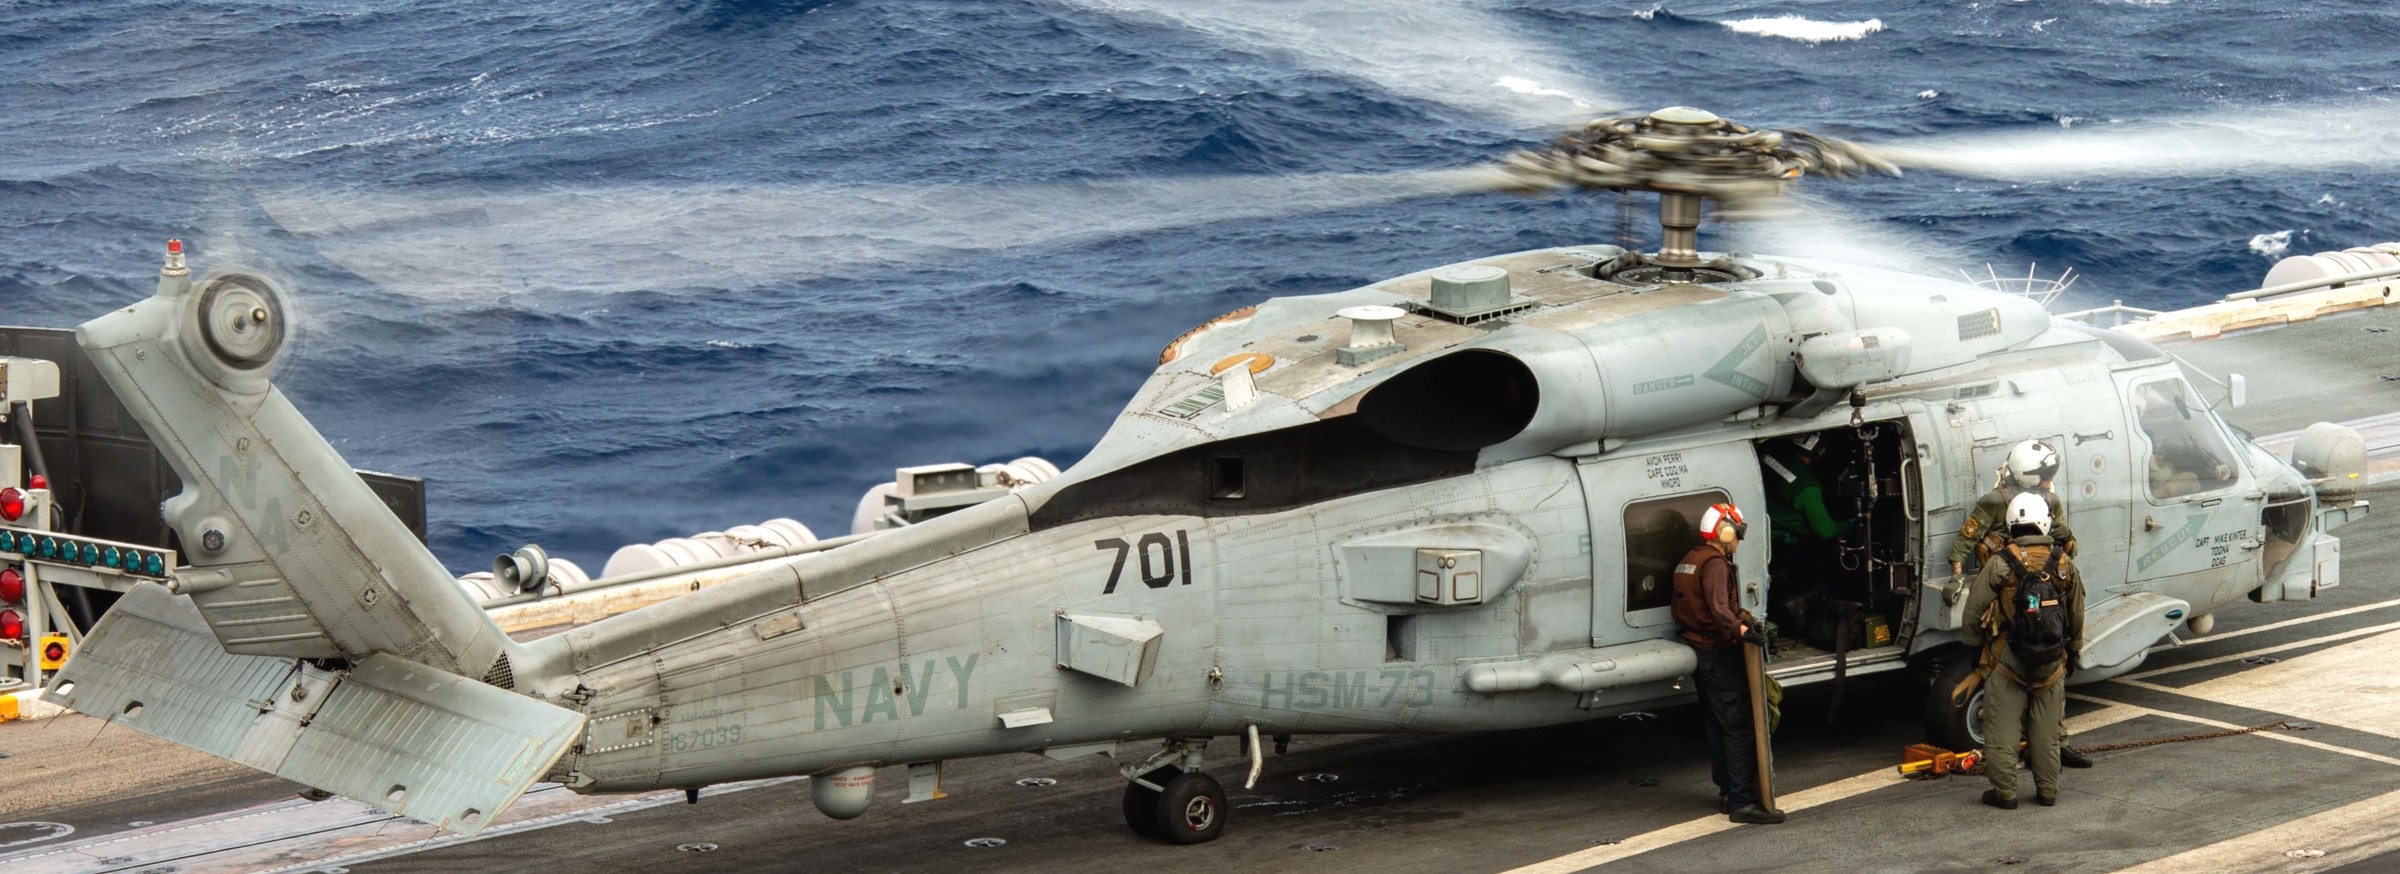 hsm-73 battlecats helicopter maritime strike squadron mh-60r seahawk cvw-17 cvn-68 uss nimitz 95